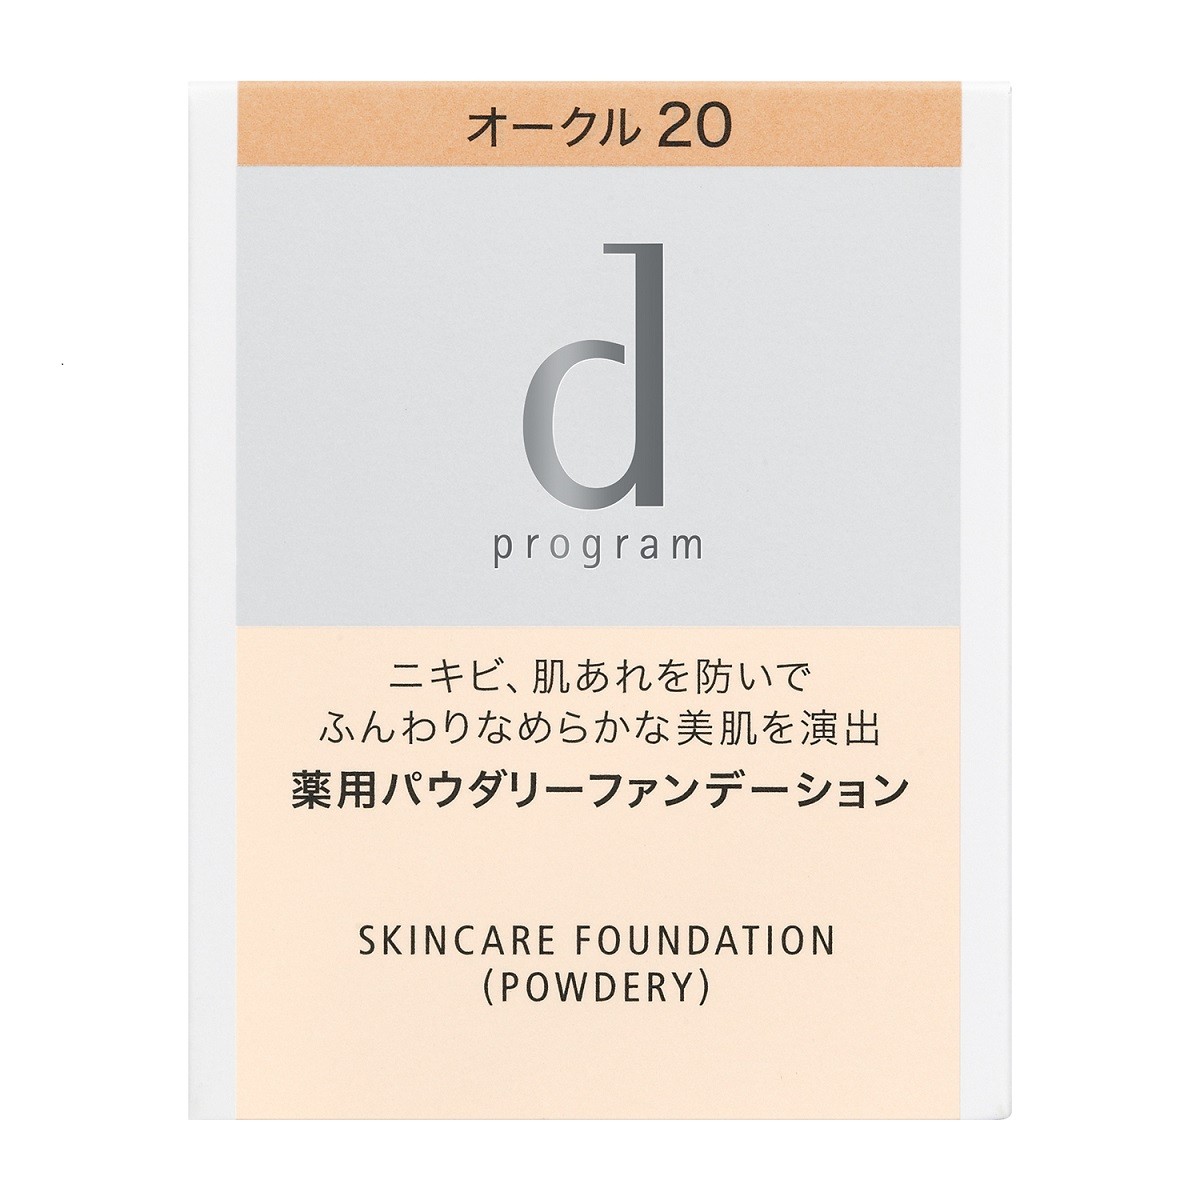 * Shiseido recognition shop medicine for skin care foundation ( powder Lee ) oak ru20(re Phil ) free shipping. takkyubin (home delivery service) same etc. delivery number of days 